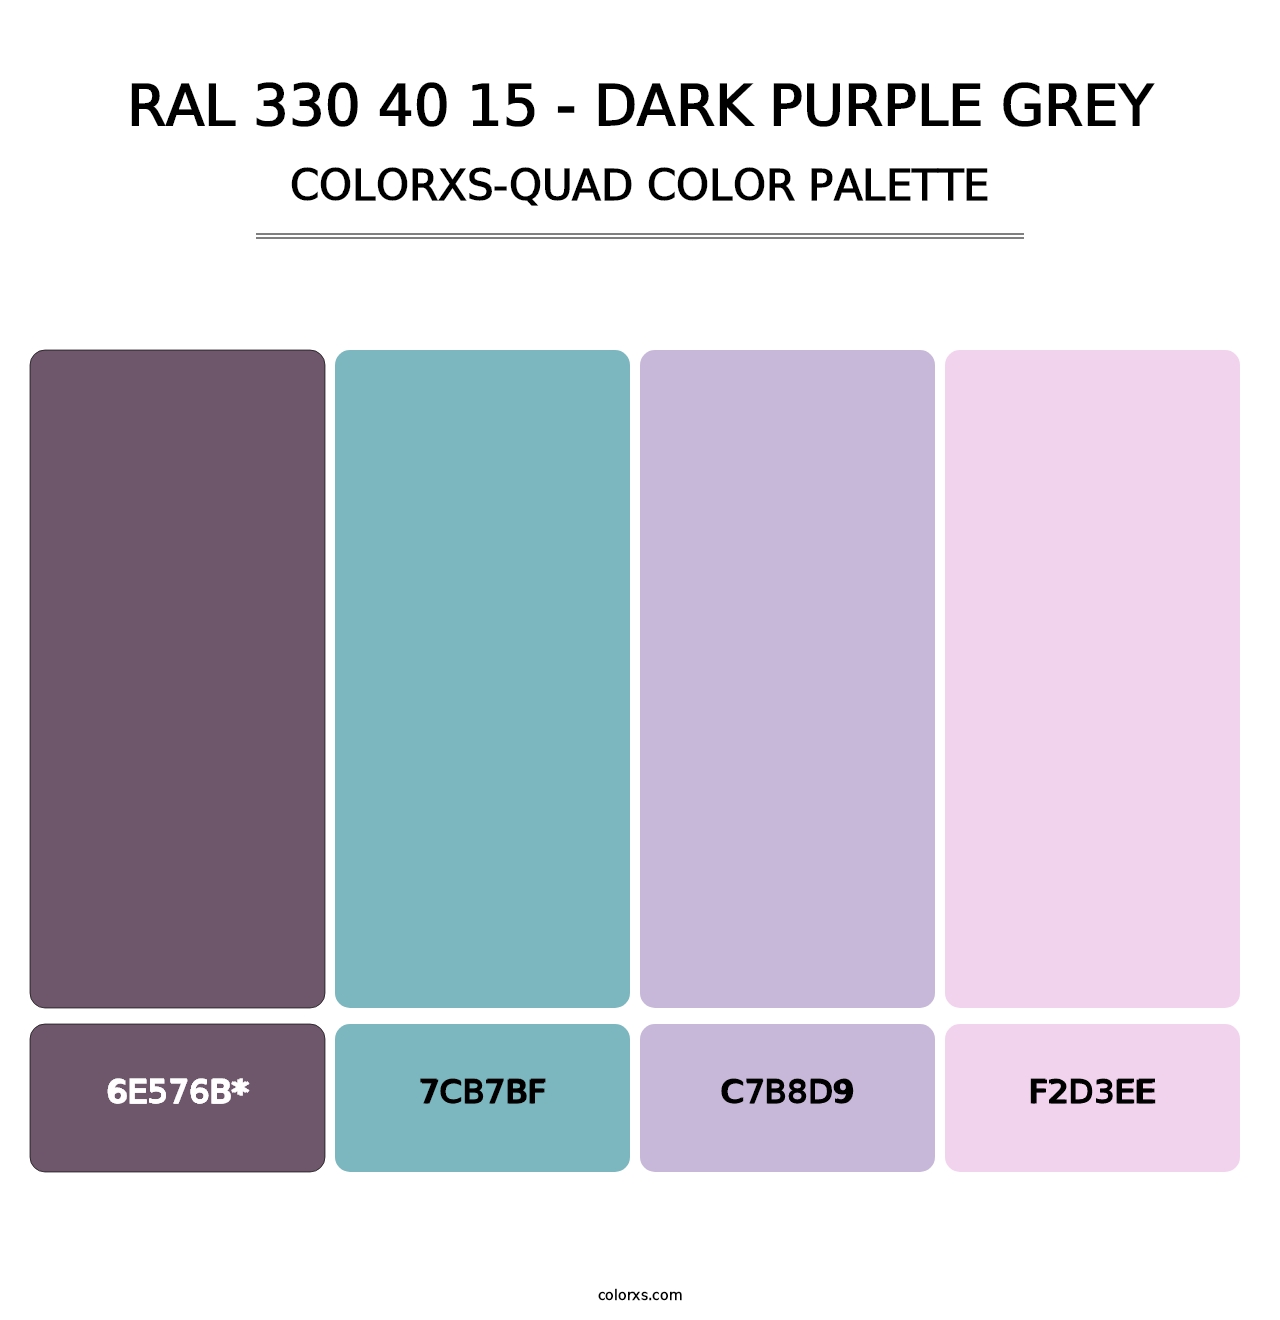 RAL 330 40 15 - Dark Purple Grey - Colorxs Quad Palette